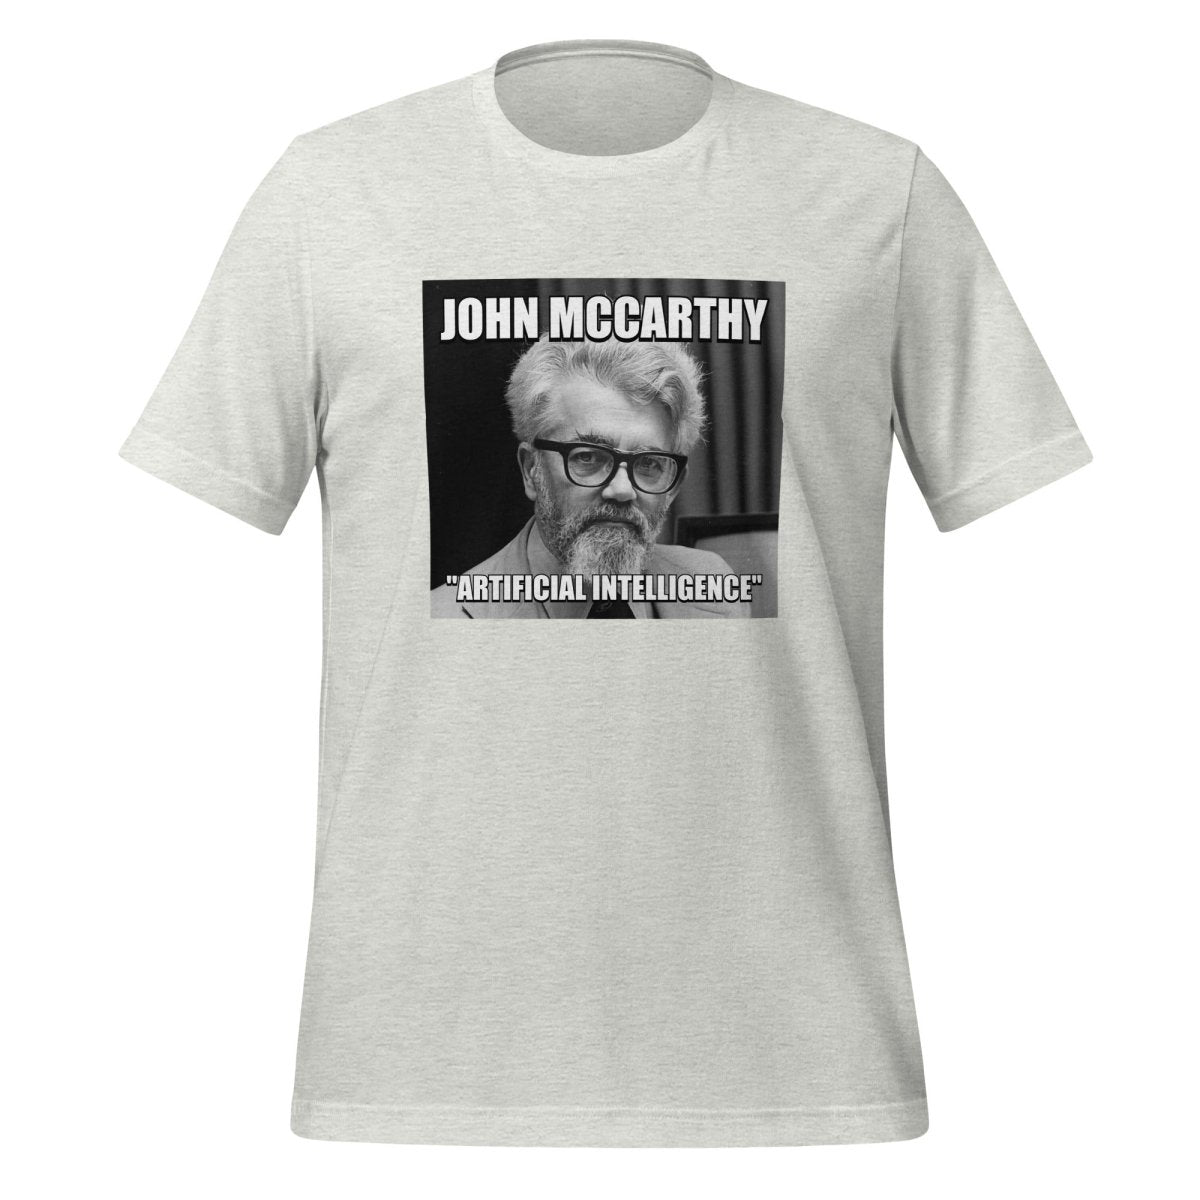 John McCarthy "Artificial Intelligence" T - Shirt (unisex) - Ash - AI Store